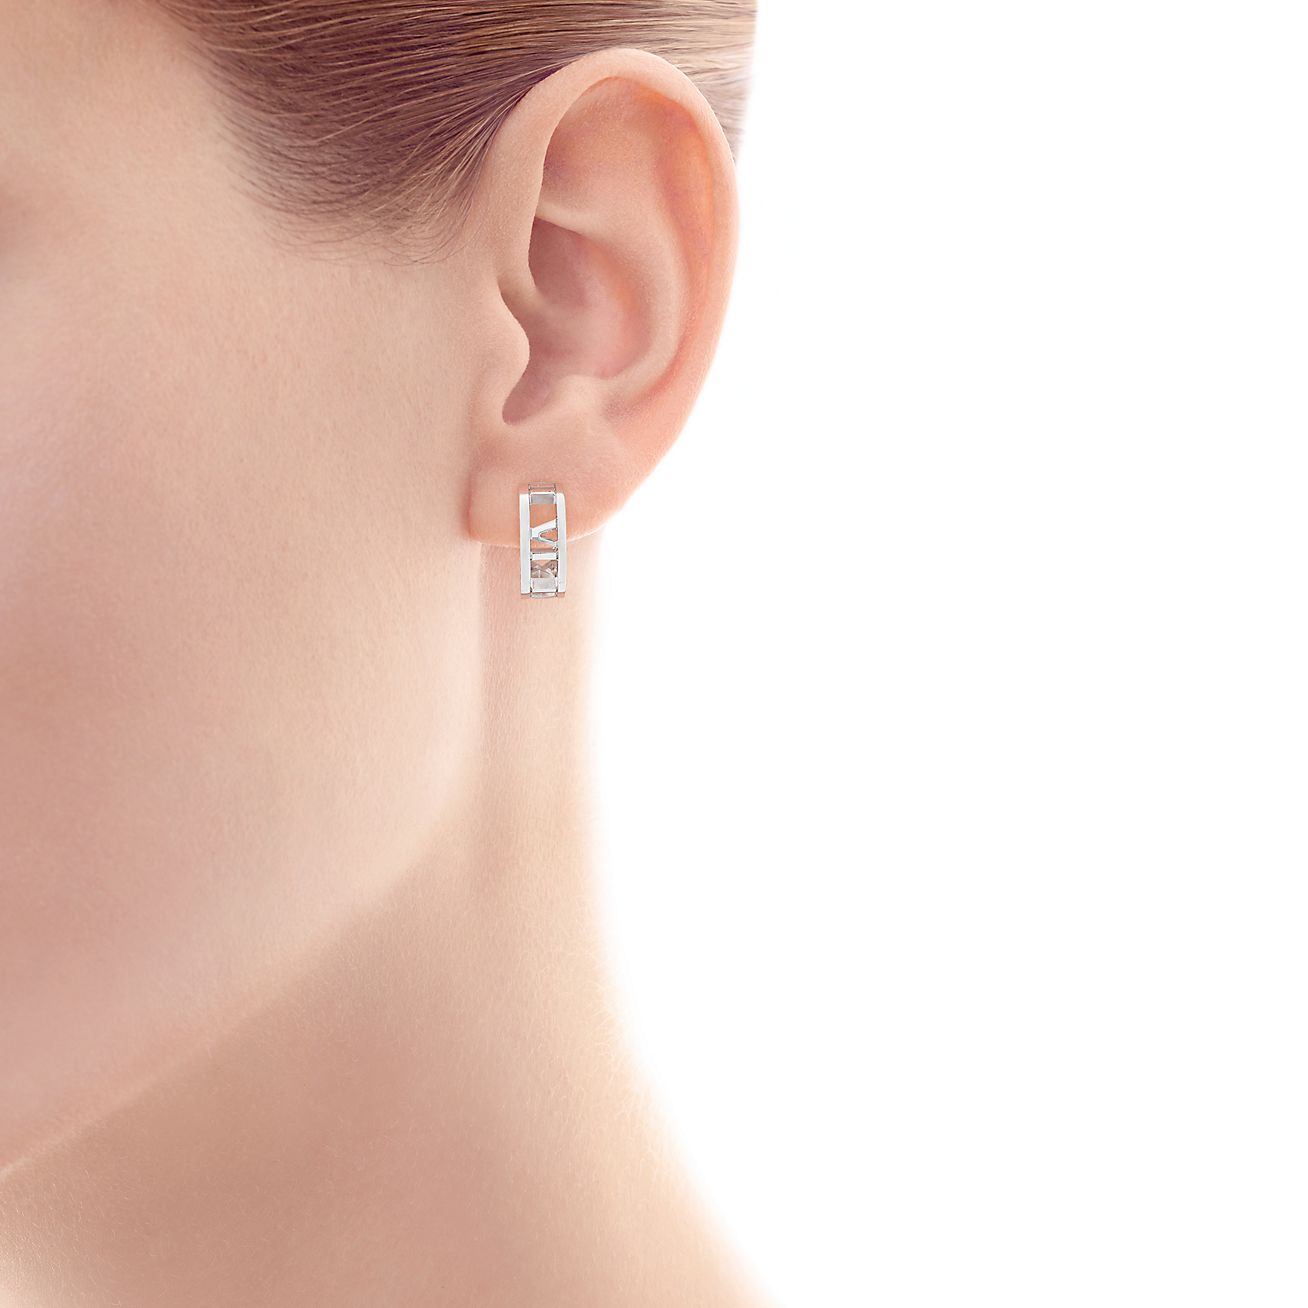 tiffany roman numeral earrings